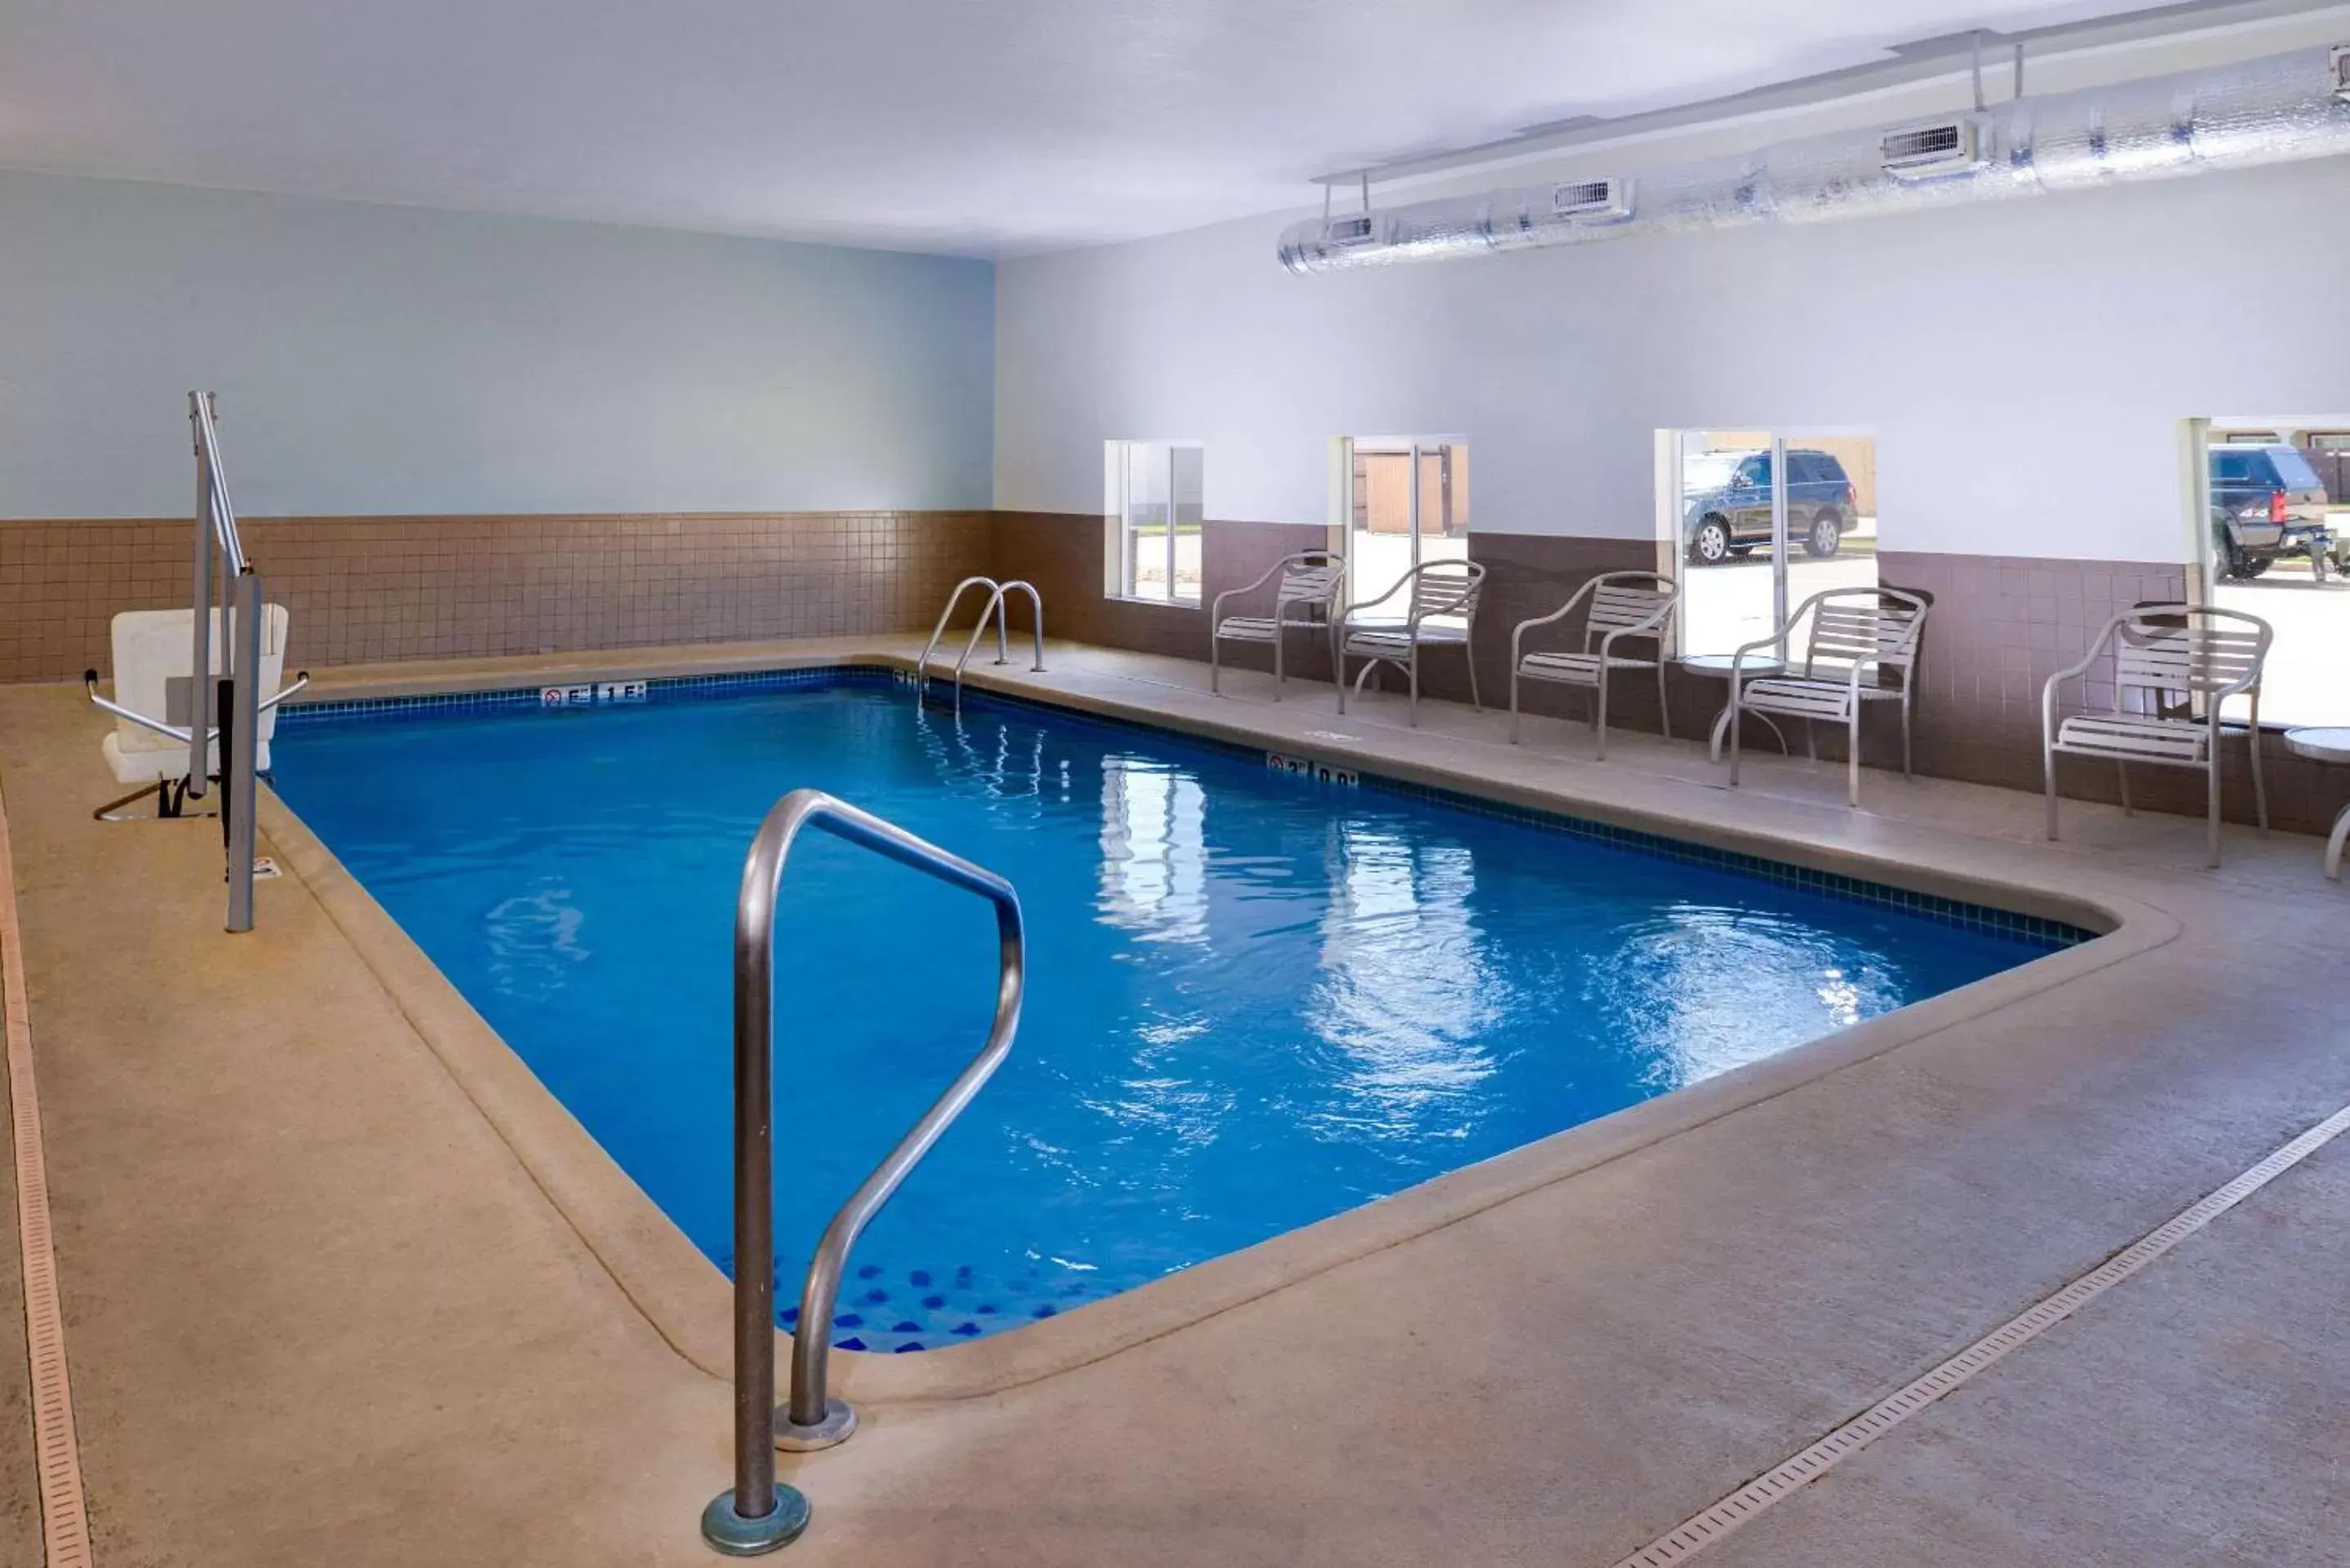 On site, Swimming Pool in Comfort Inn and Suites Joplin